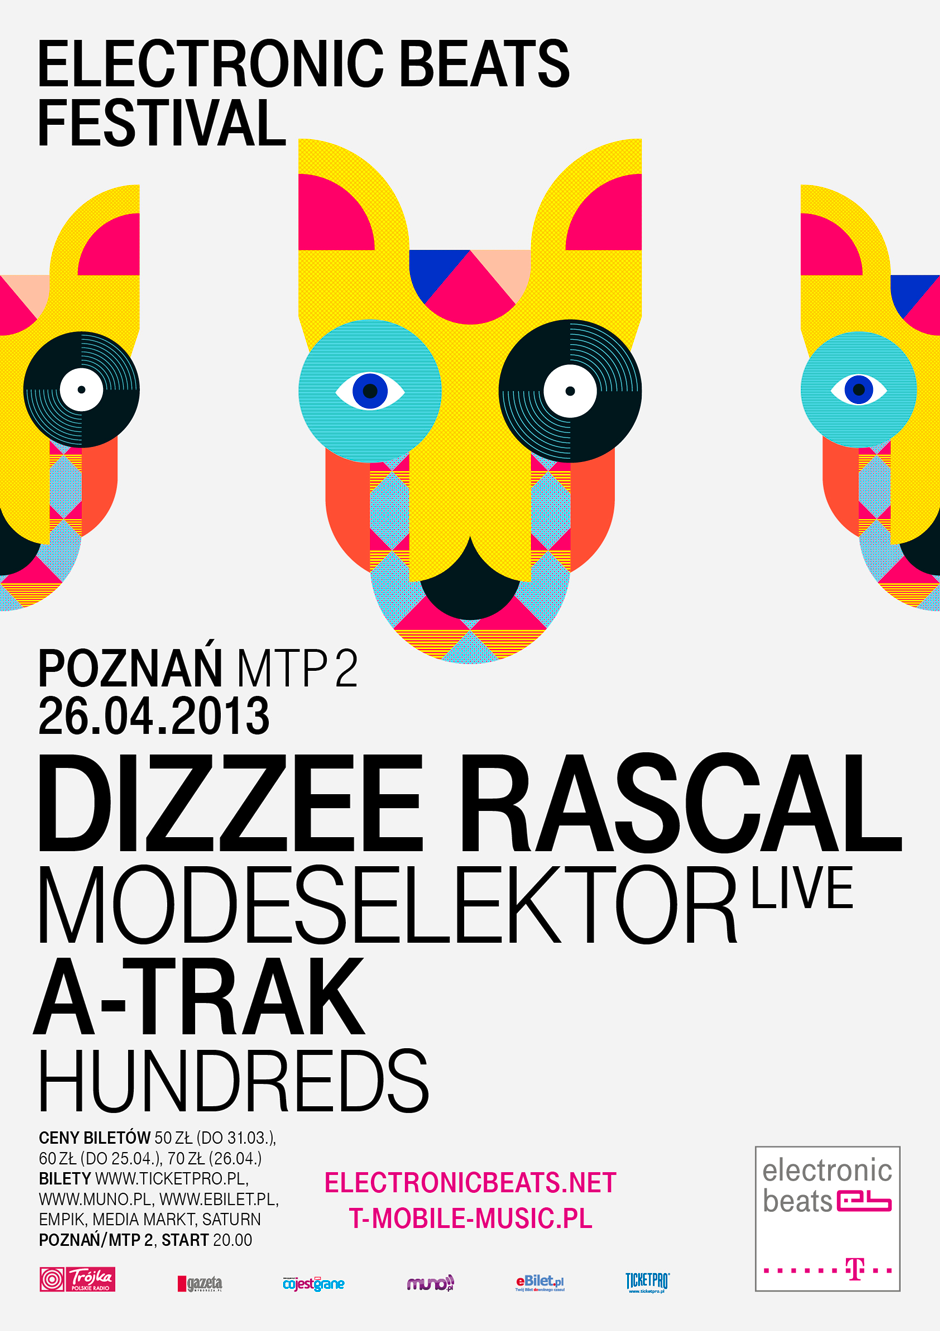 Electronic Beats Festival Poznań 2013: Hundreds to join A-Trak and Modeselektor